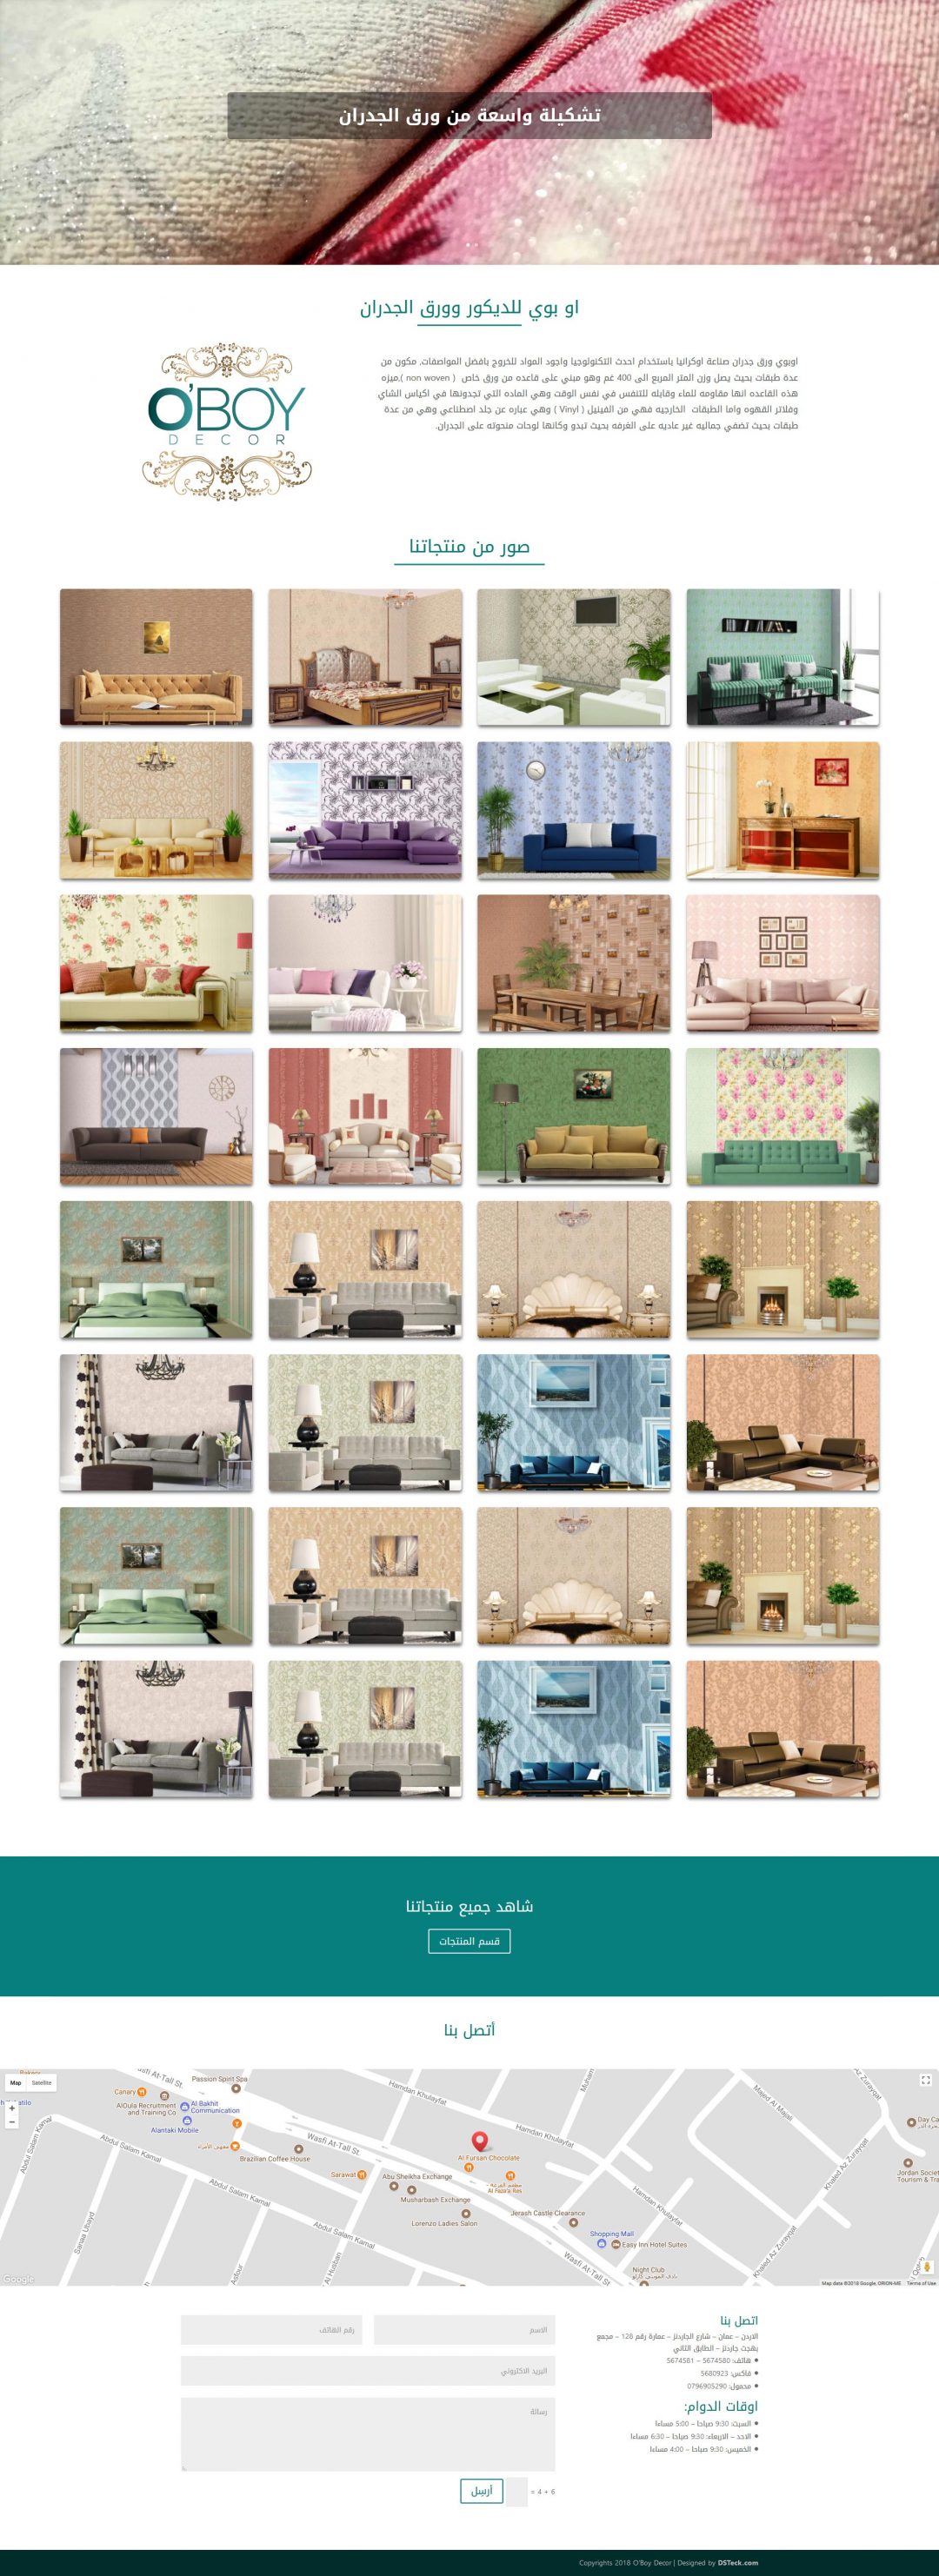 OBoyDecor Wallpapers Jordan